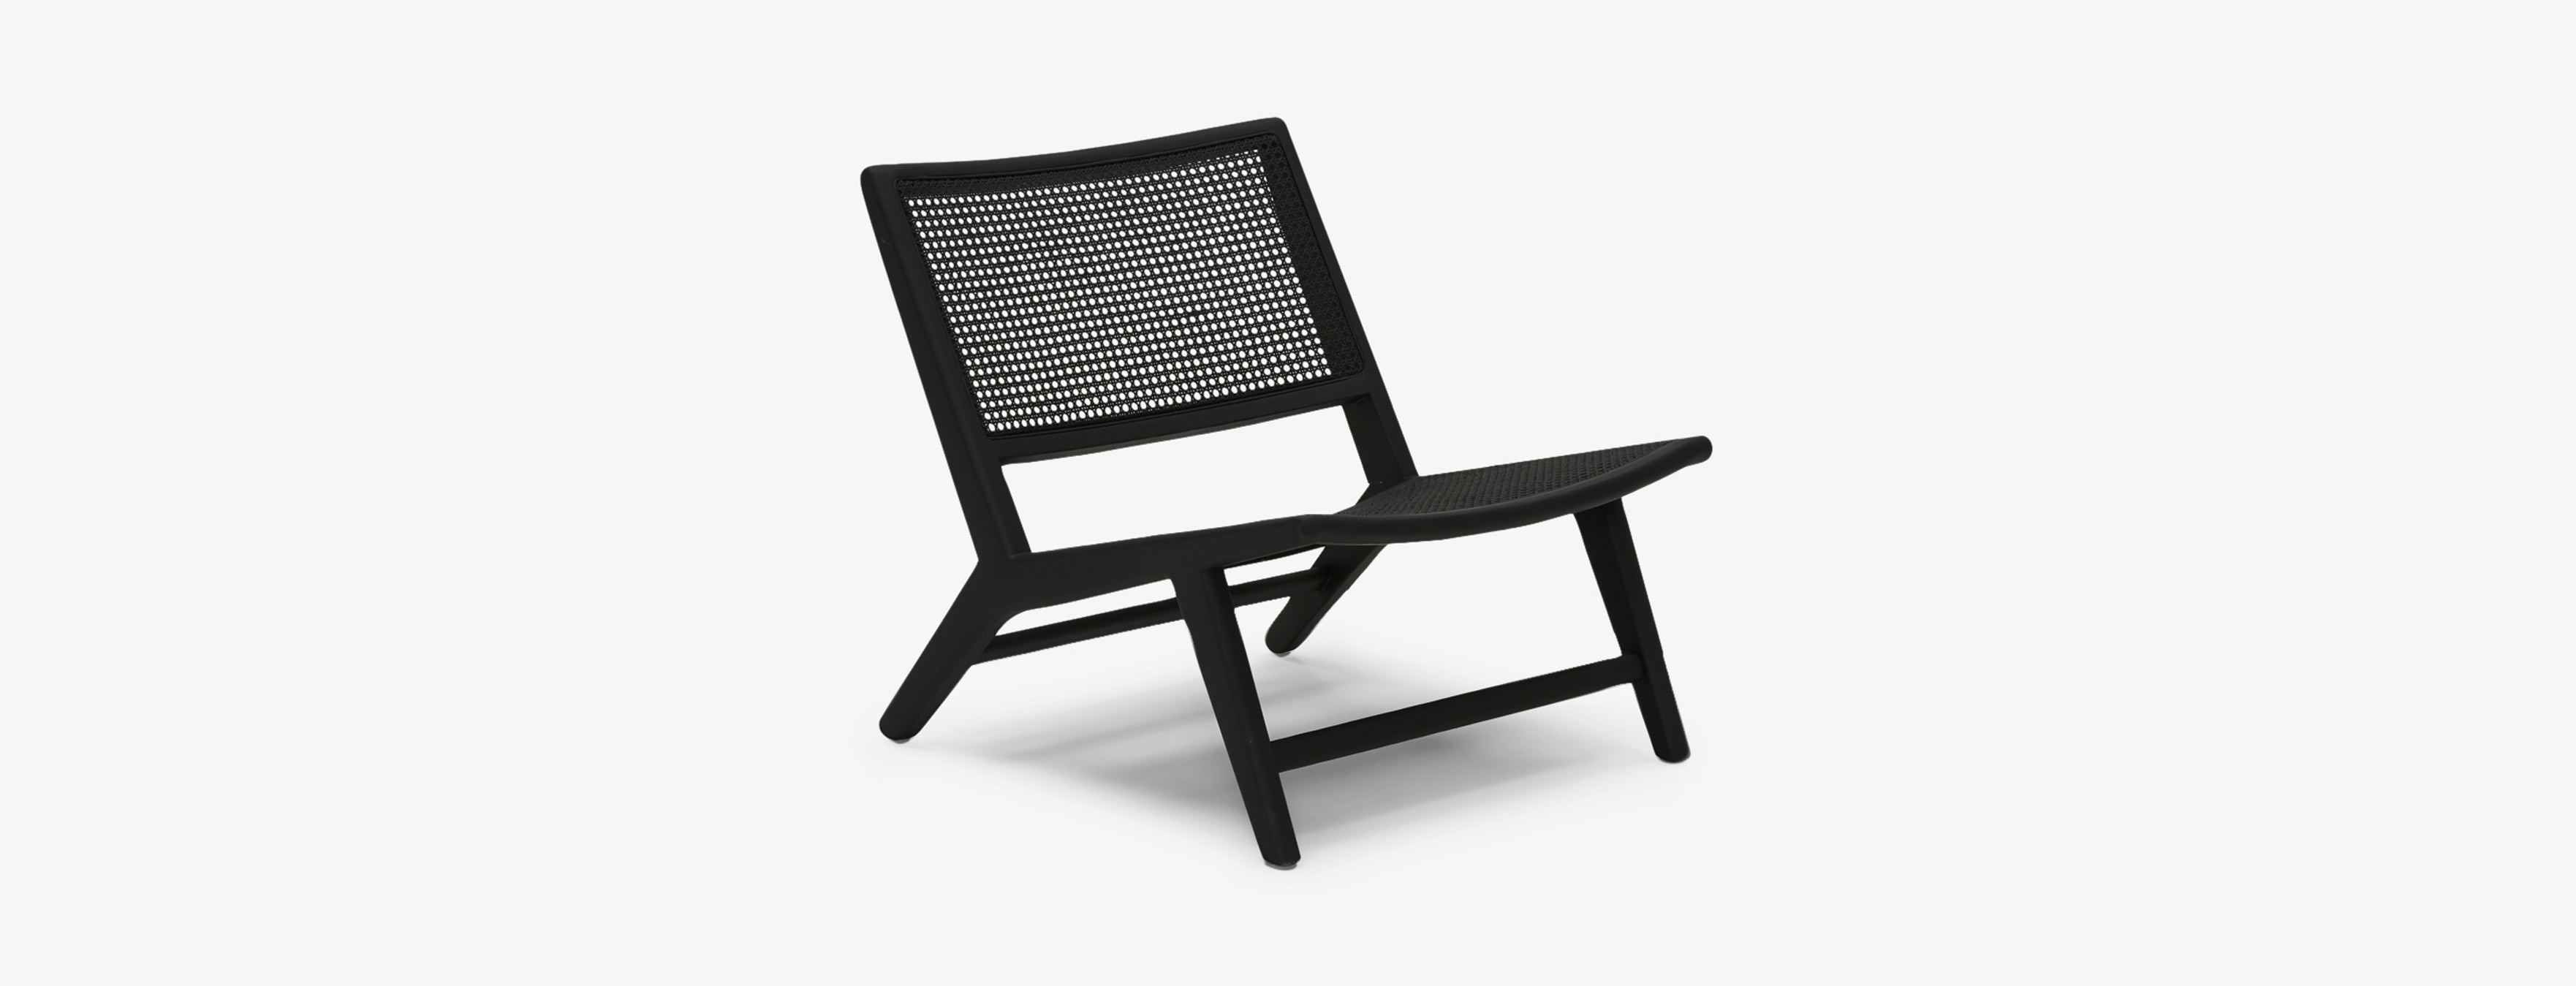 Vienna Chair - Black - Image 0